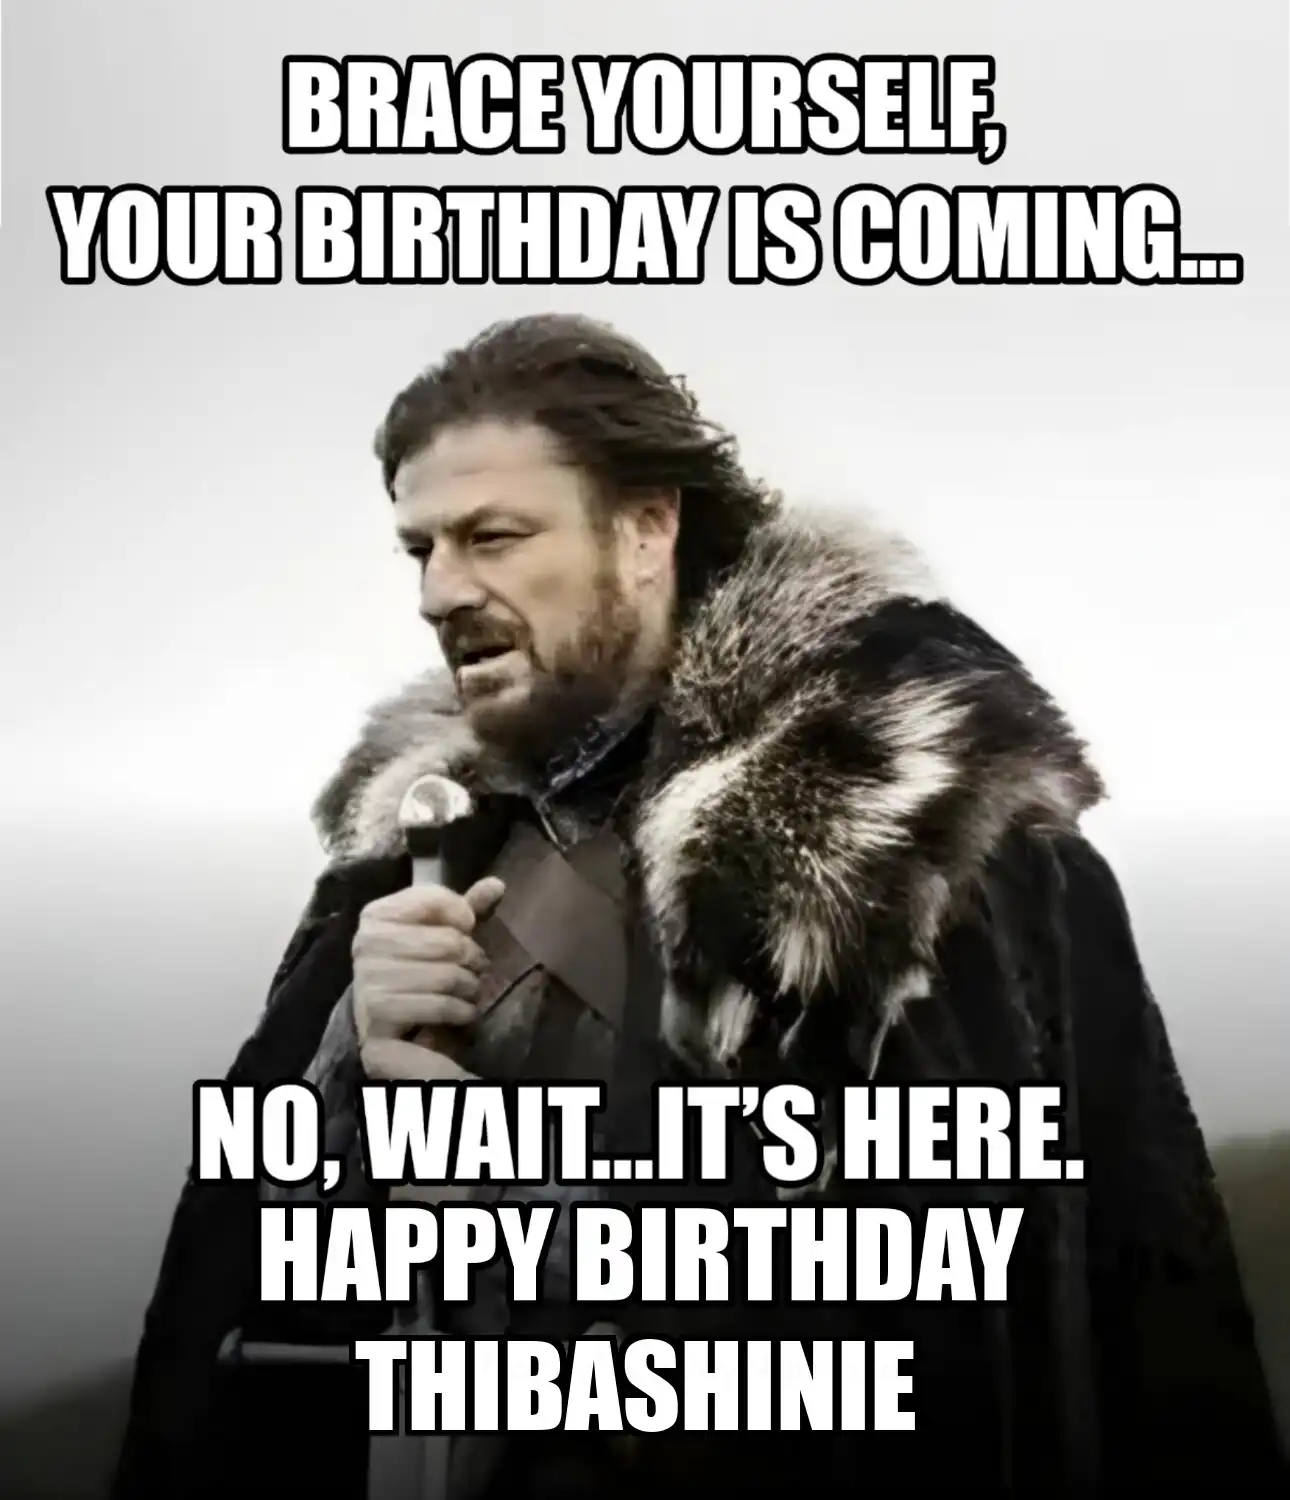 Happy Birthday Thibashinie Brace Yourself Your Birthday Is Coming Meme